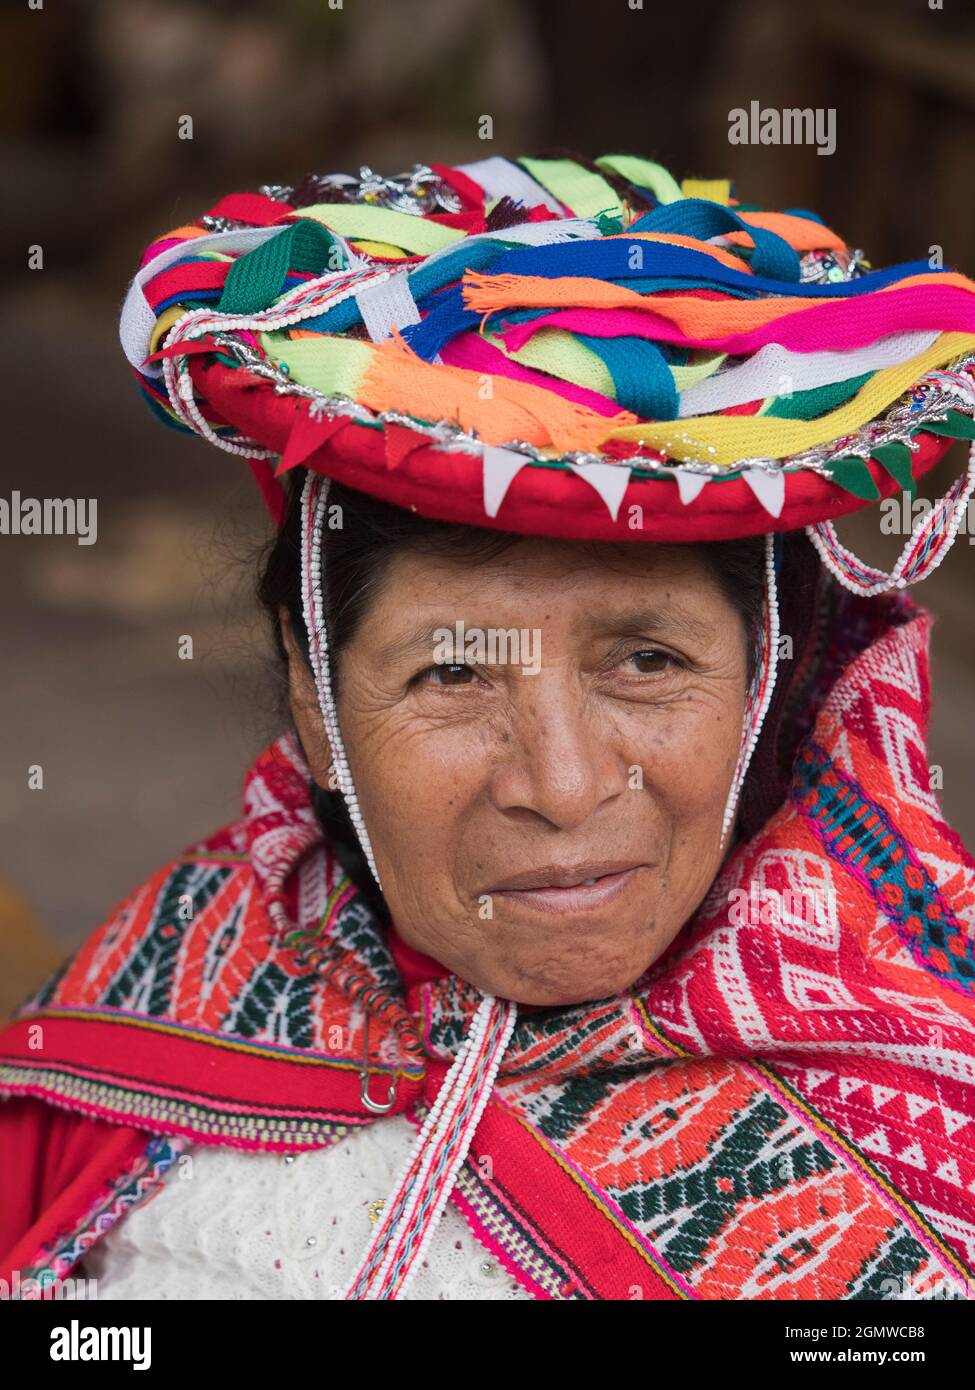 Awanakancha, Peru - 11 May 2018; one woman in shot   Portrait of a weaver in Awanakancha, wearing colorful traditional tribal costume. Stock Photo